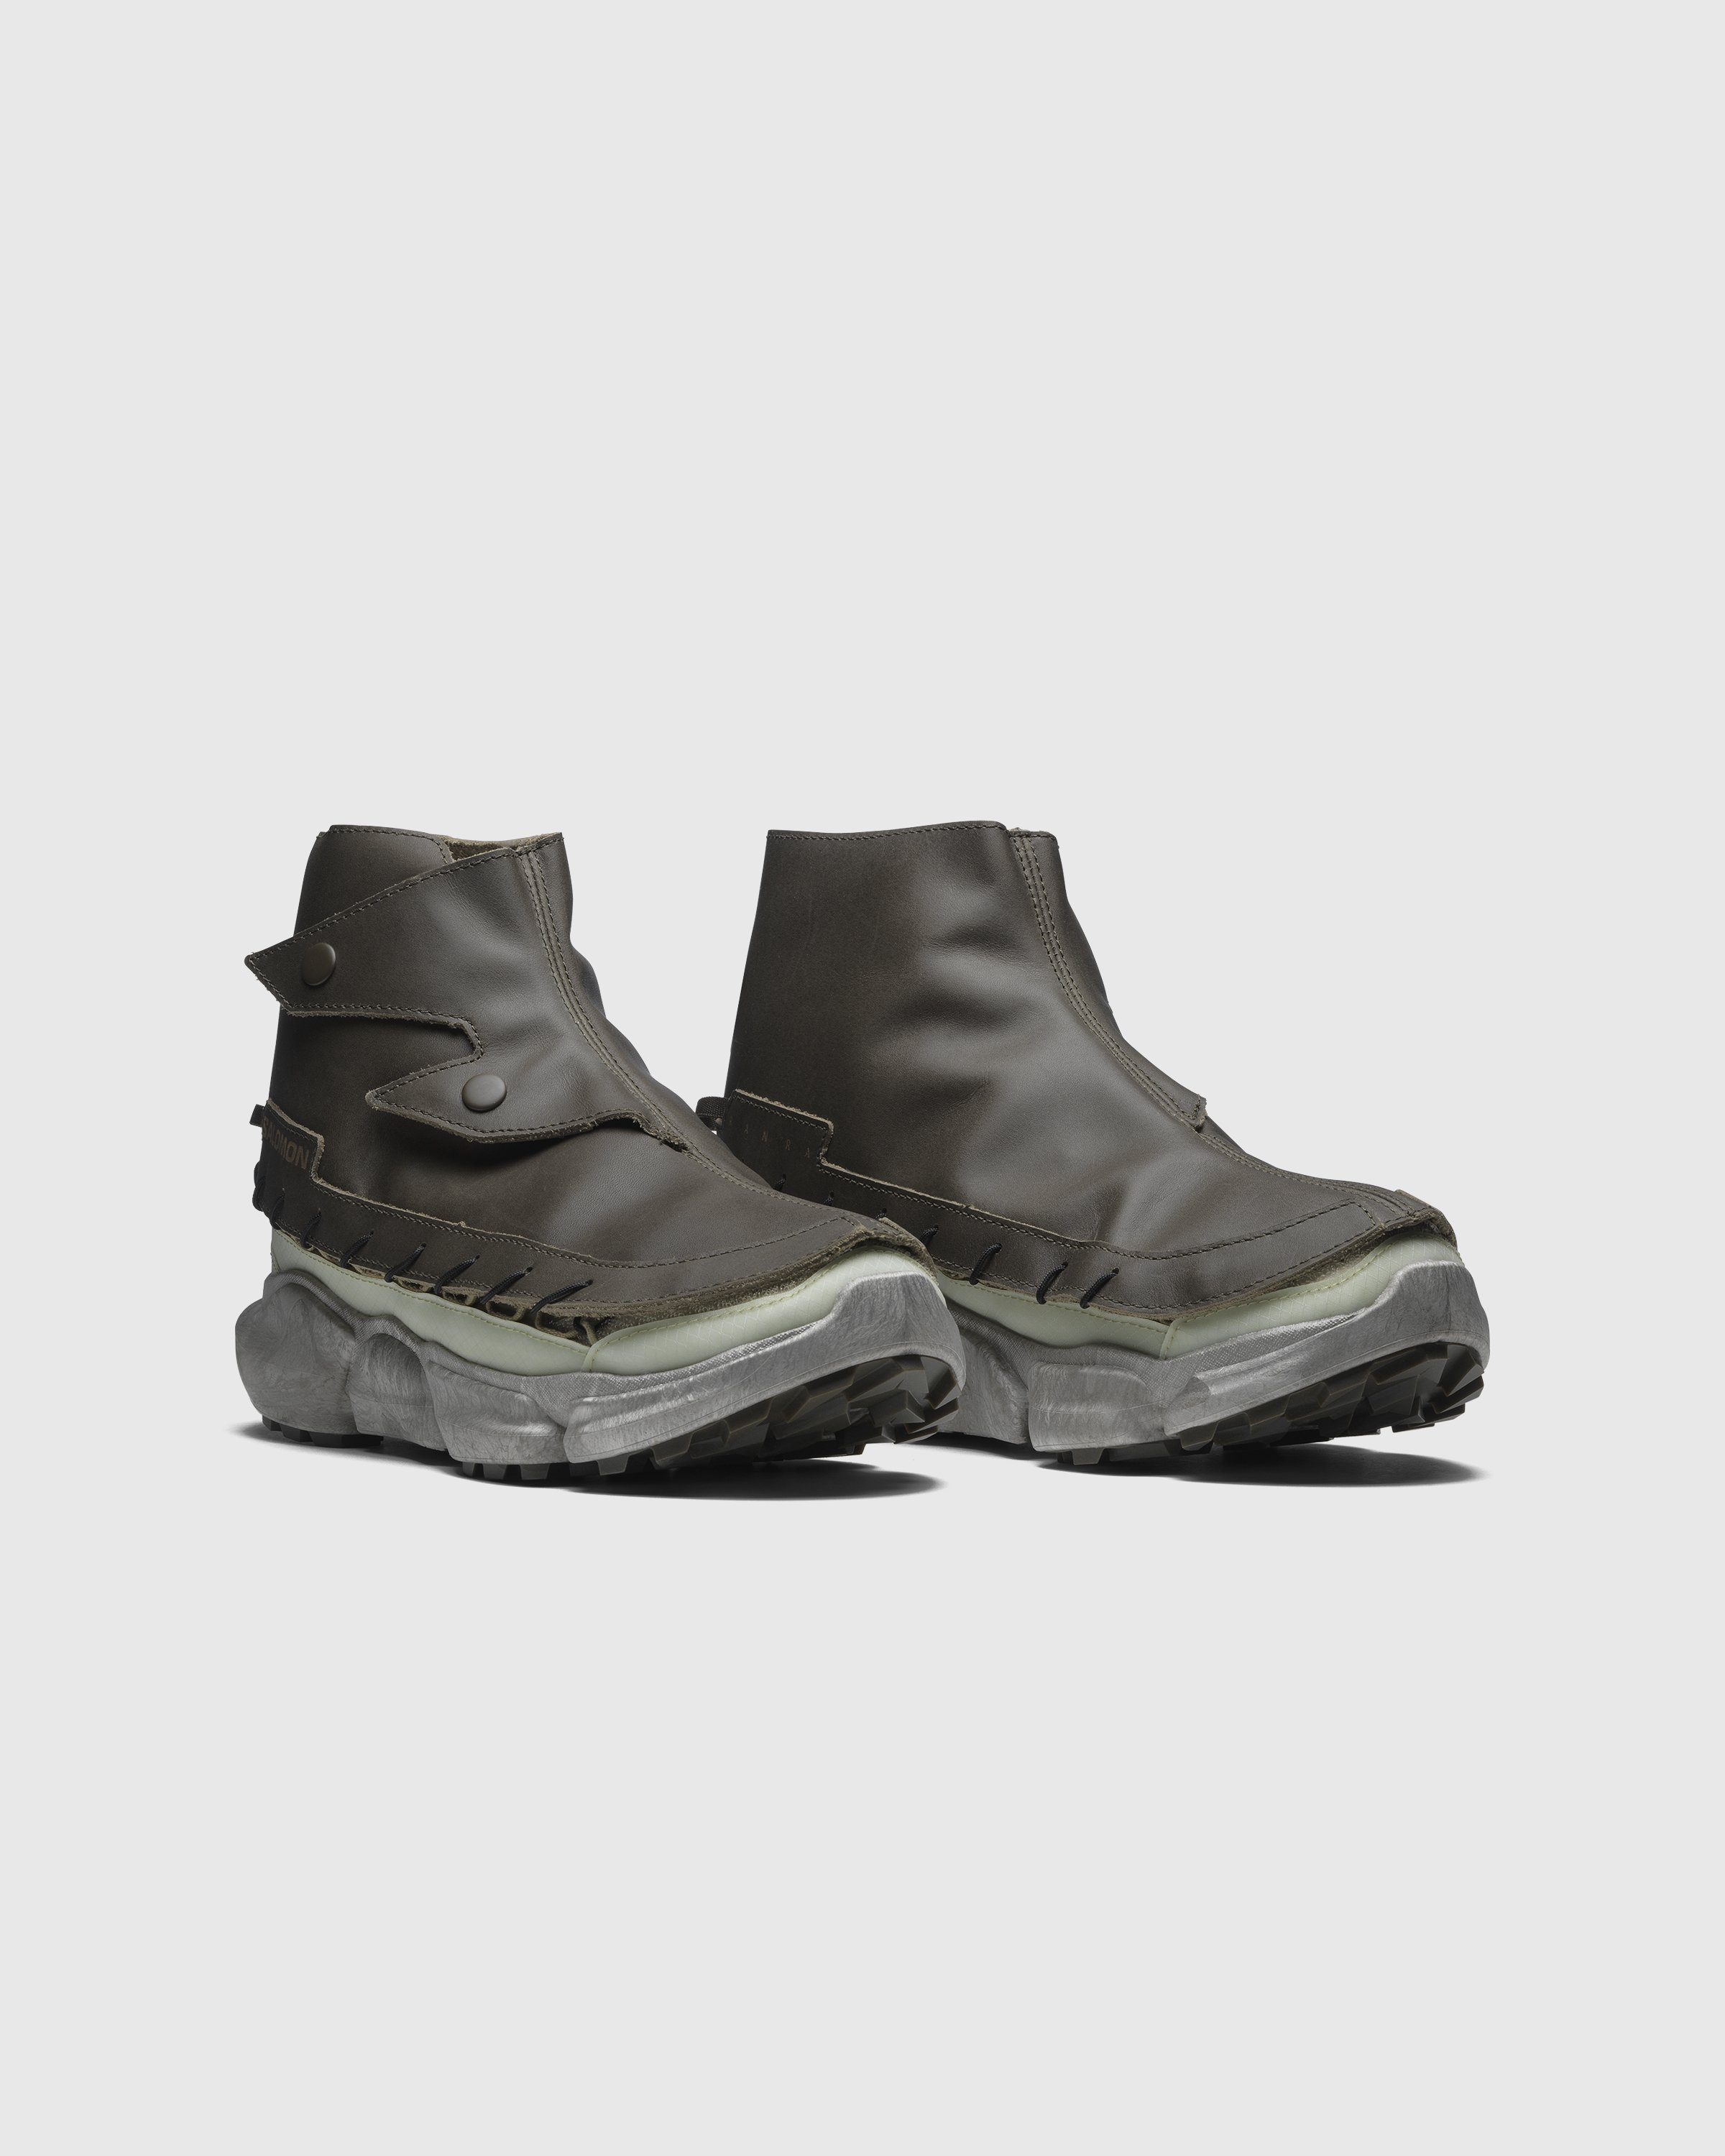 RANRA x Salomon - SKOR RANRA Bleached Sand/Alfalfa/Slate Green - Footwear - Multi - Image 4